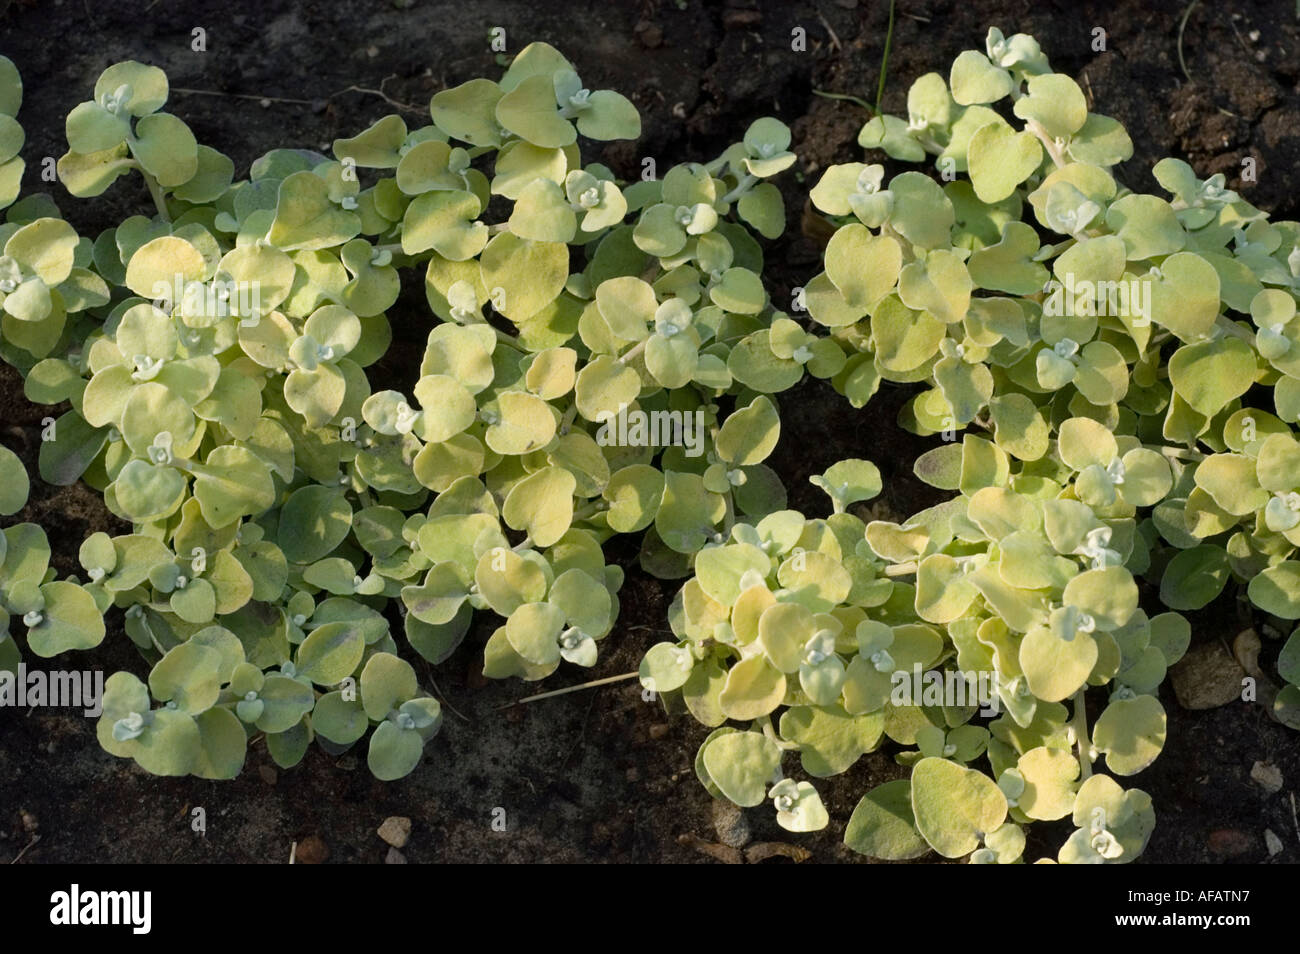 Licorice plant Compositae Helichrysum petiolare South Africa Stock Photo